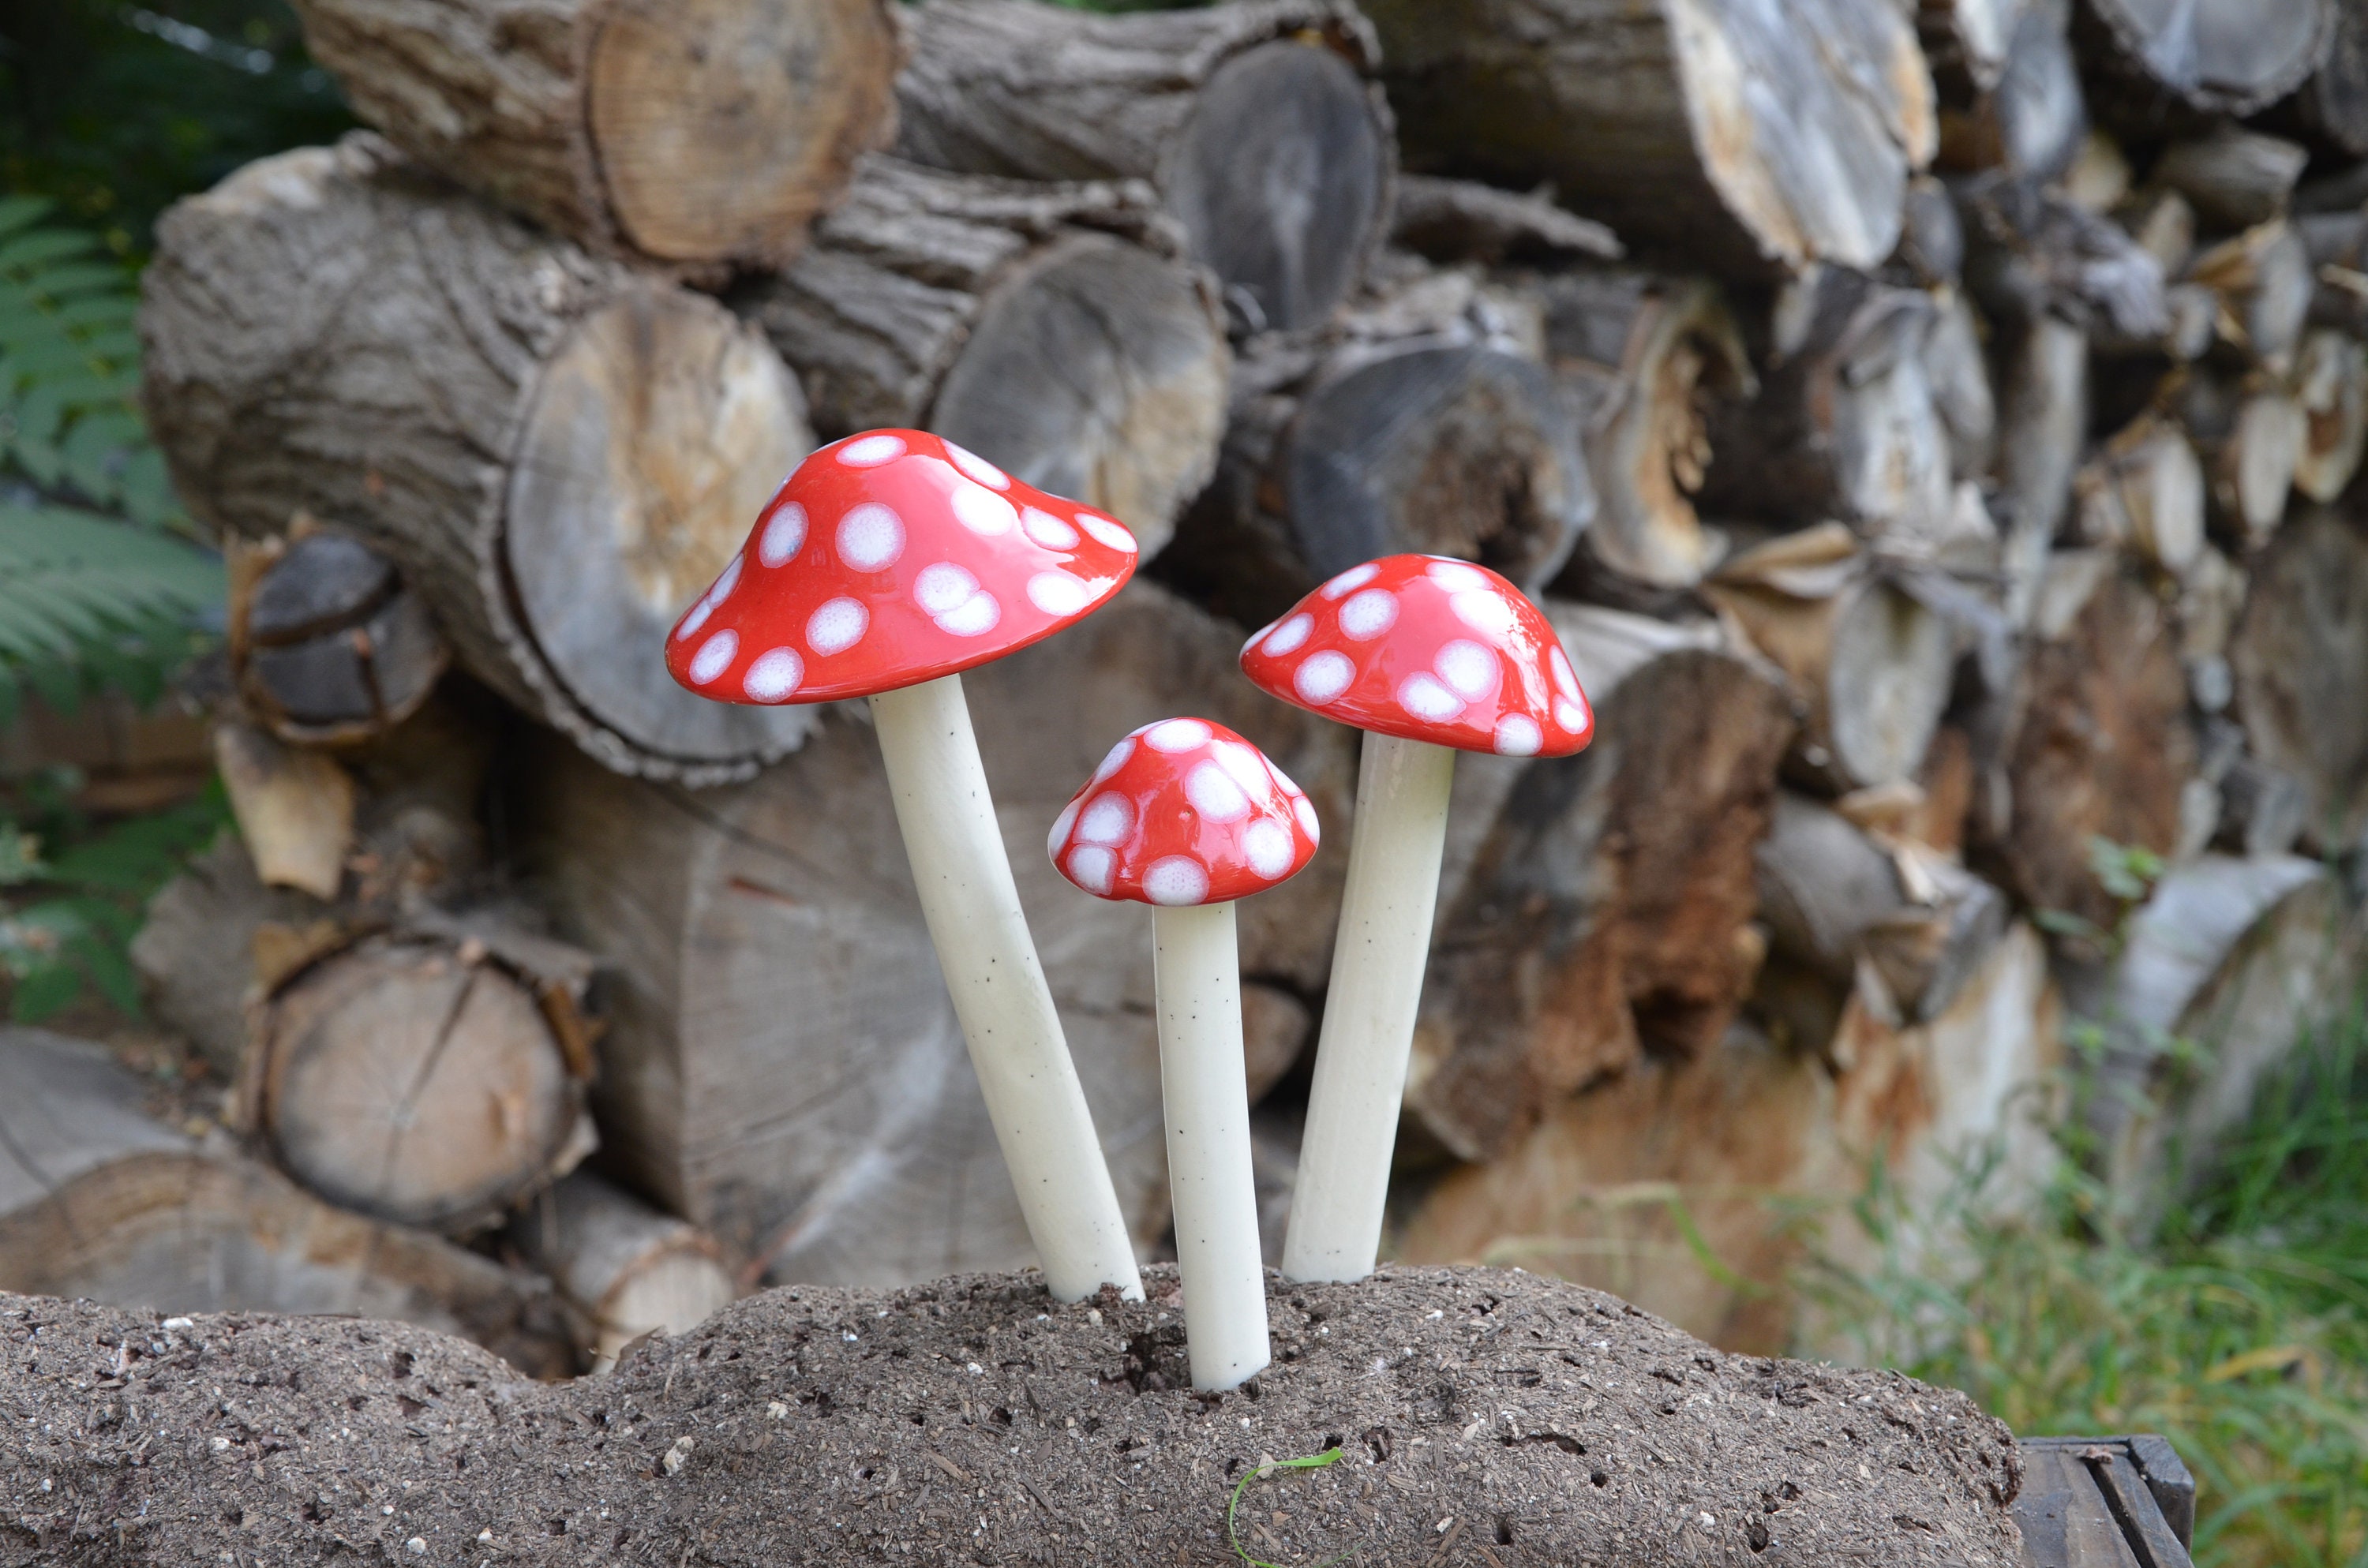 12pcs-red / White Lacquer Mushrooms-fake Mushrooms-artificial